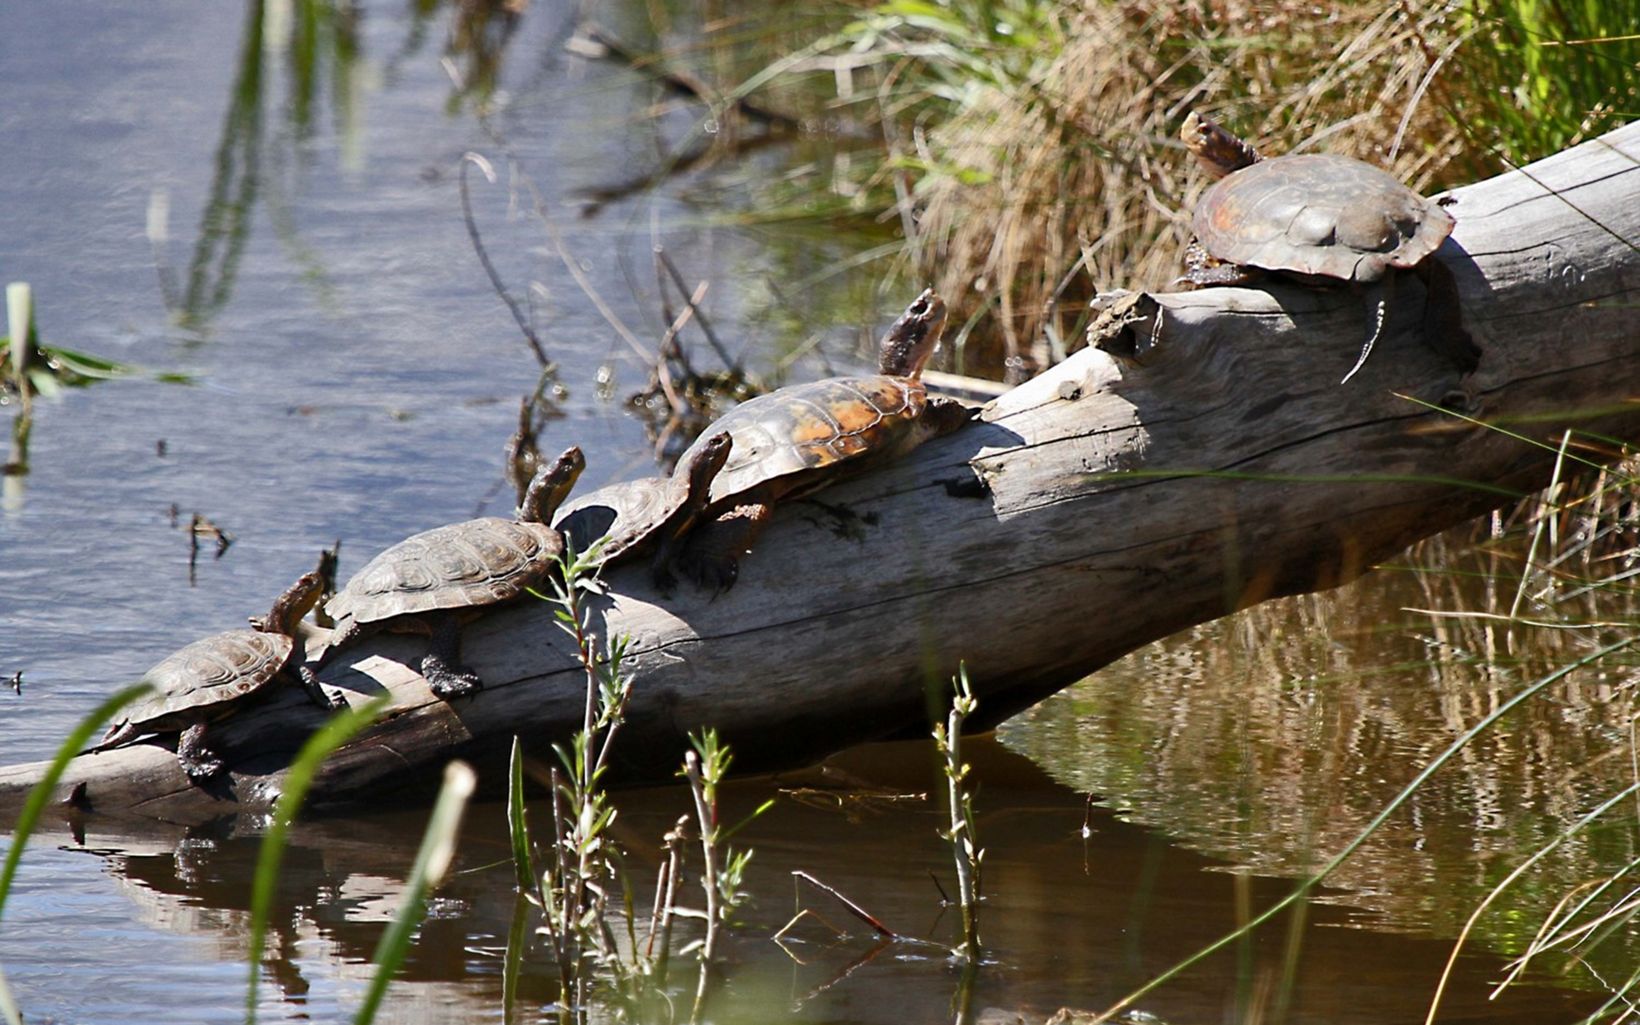 Five turtles on a log.